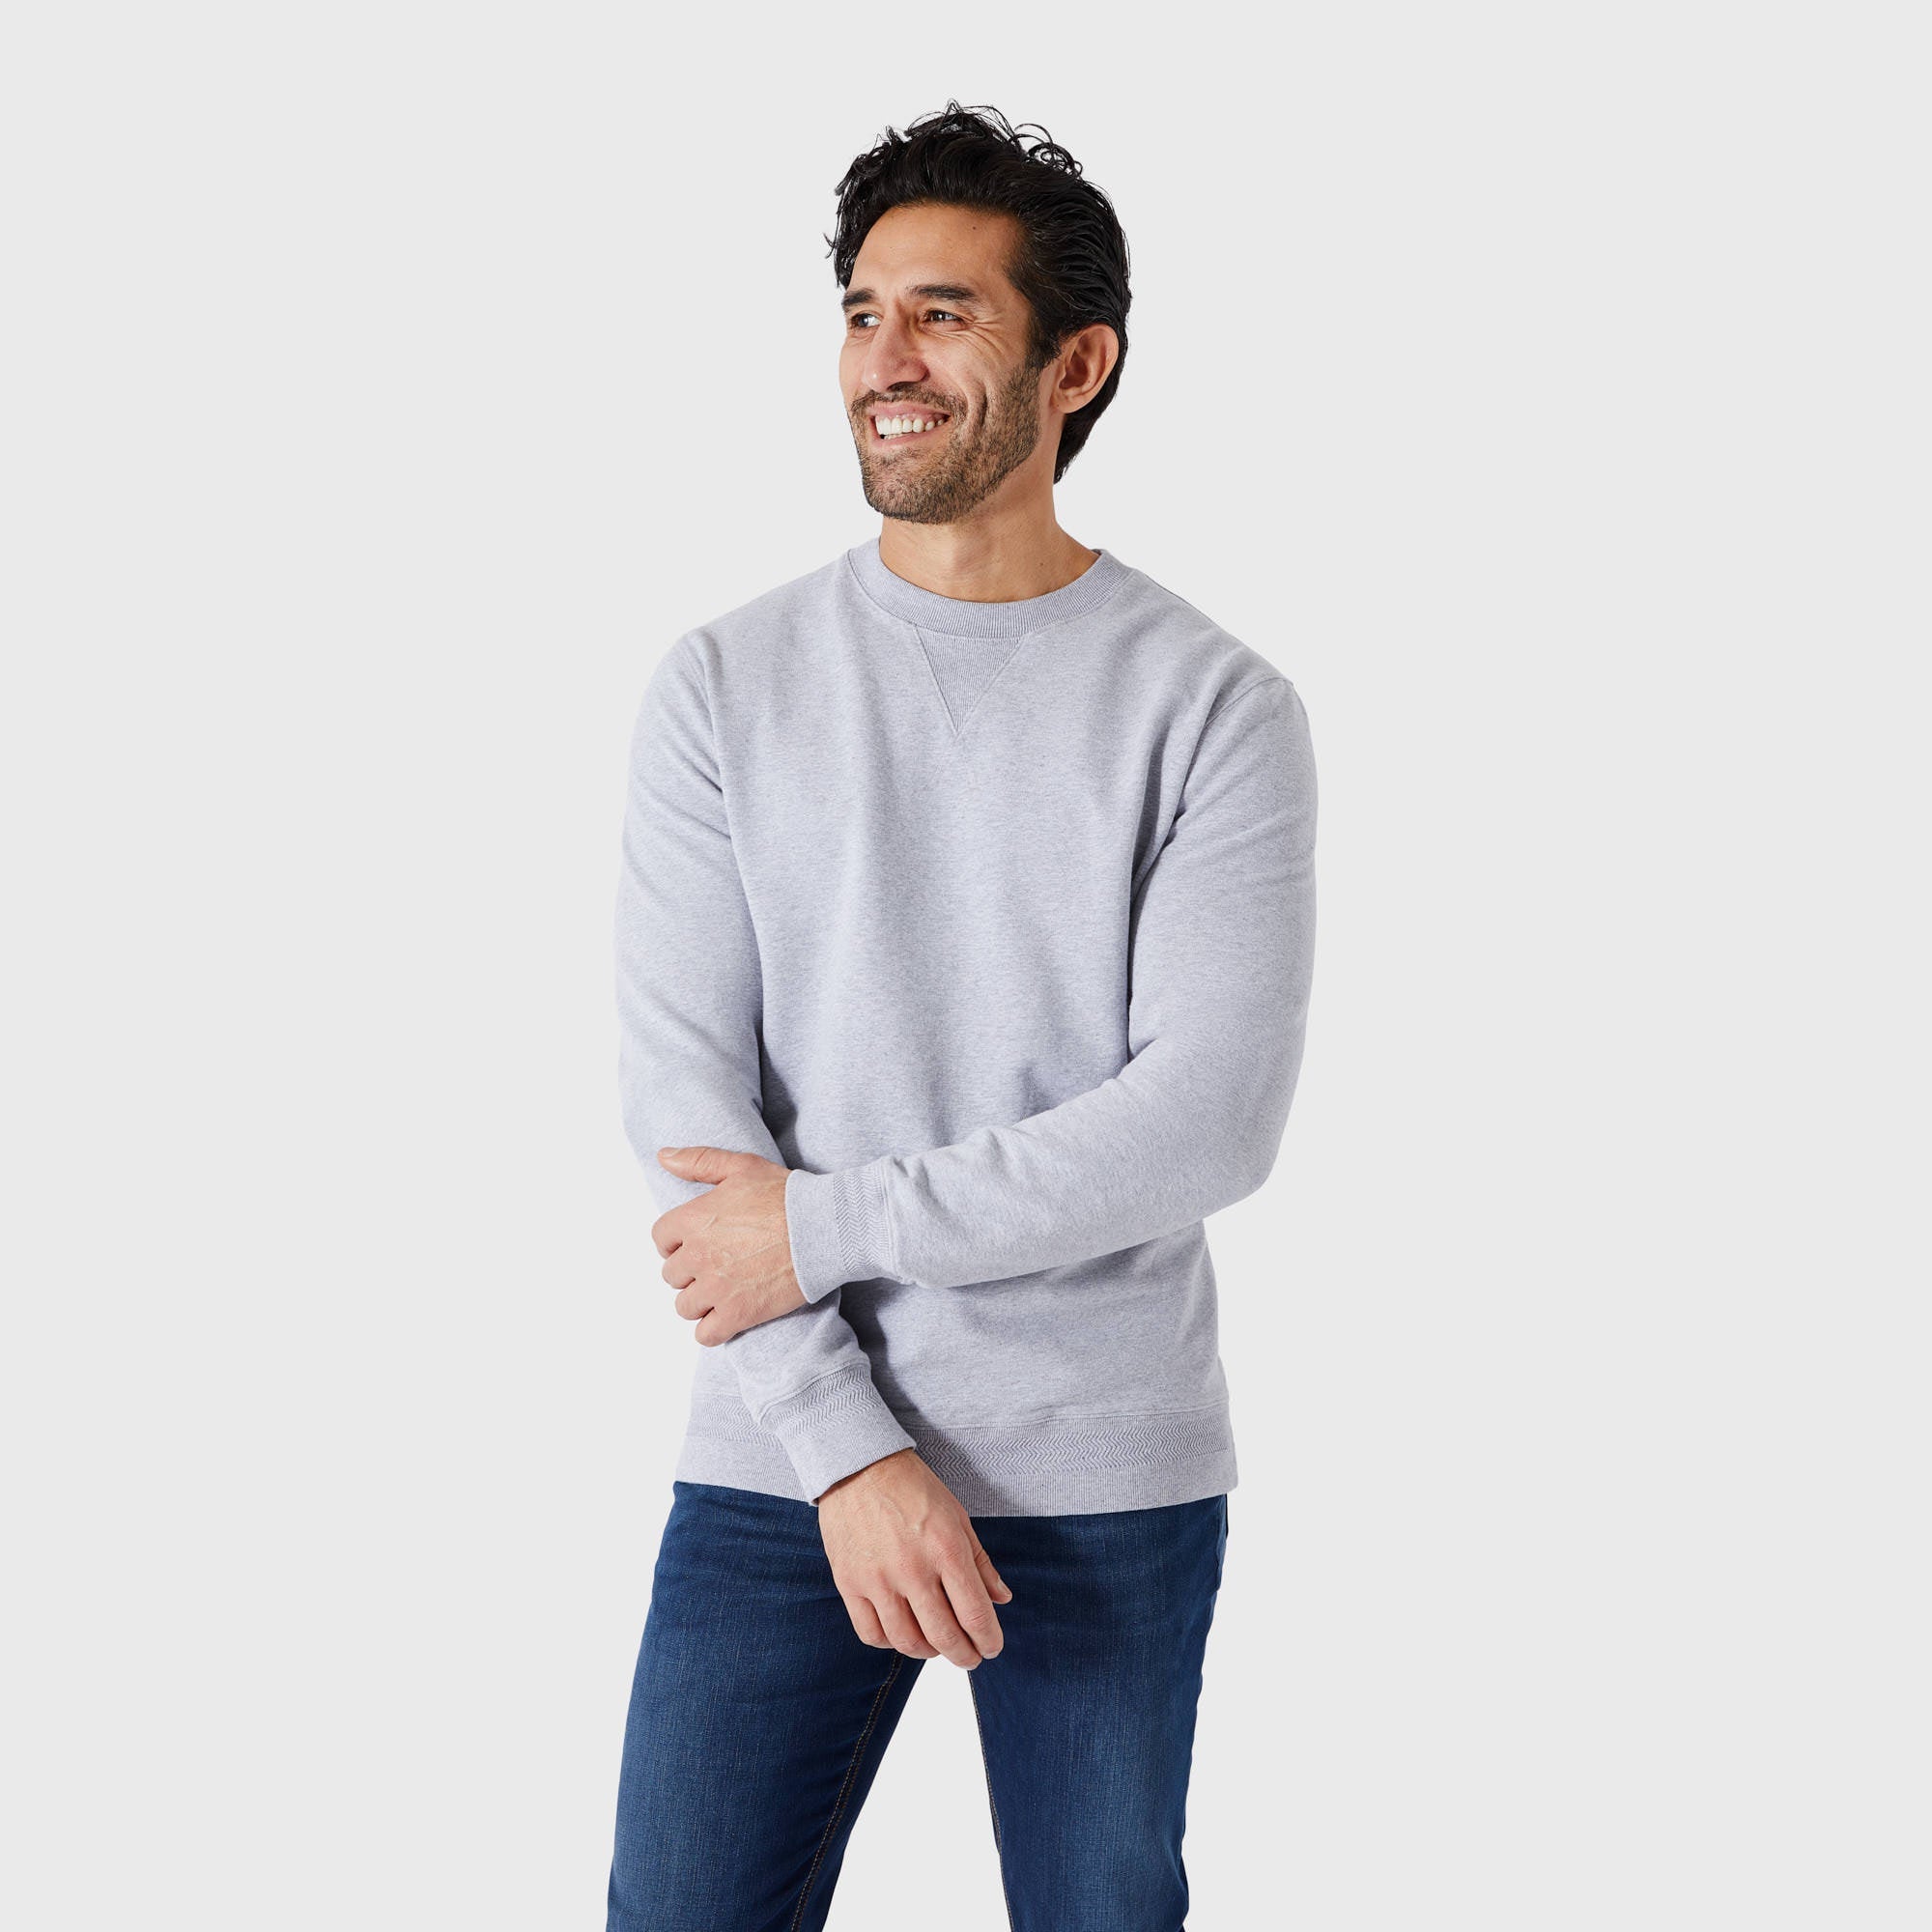 Mens Printed Graphic Sweatshirt Popular Words DESIGN Grey Marl